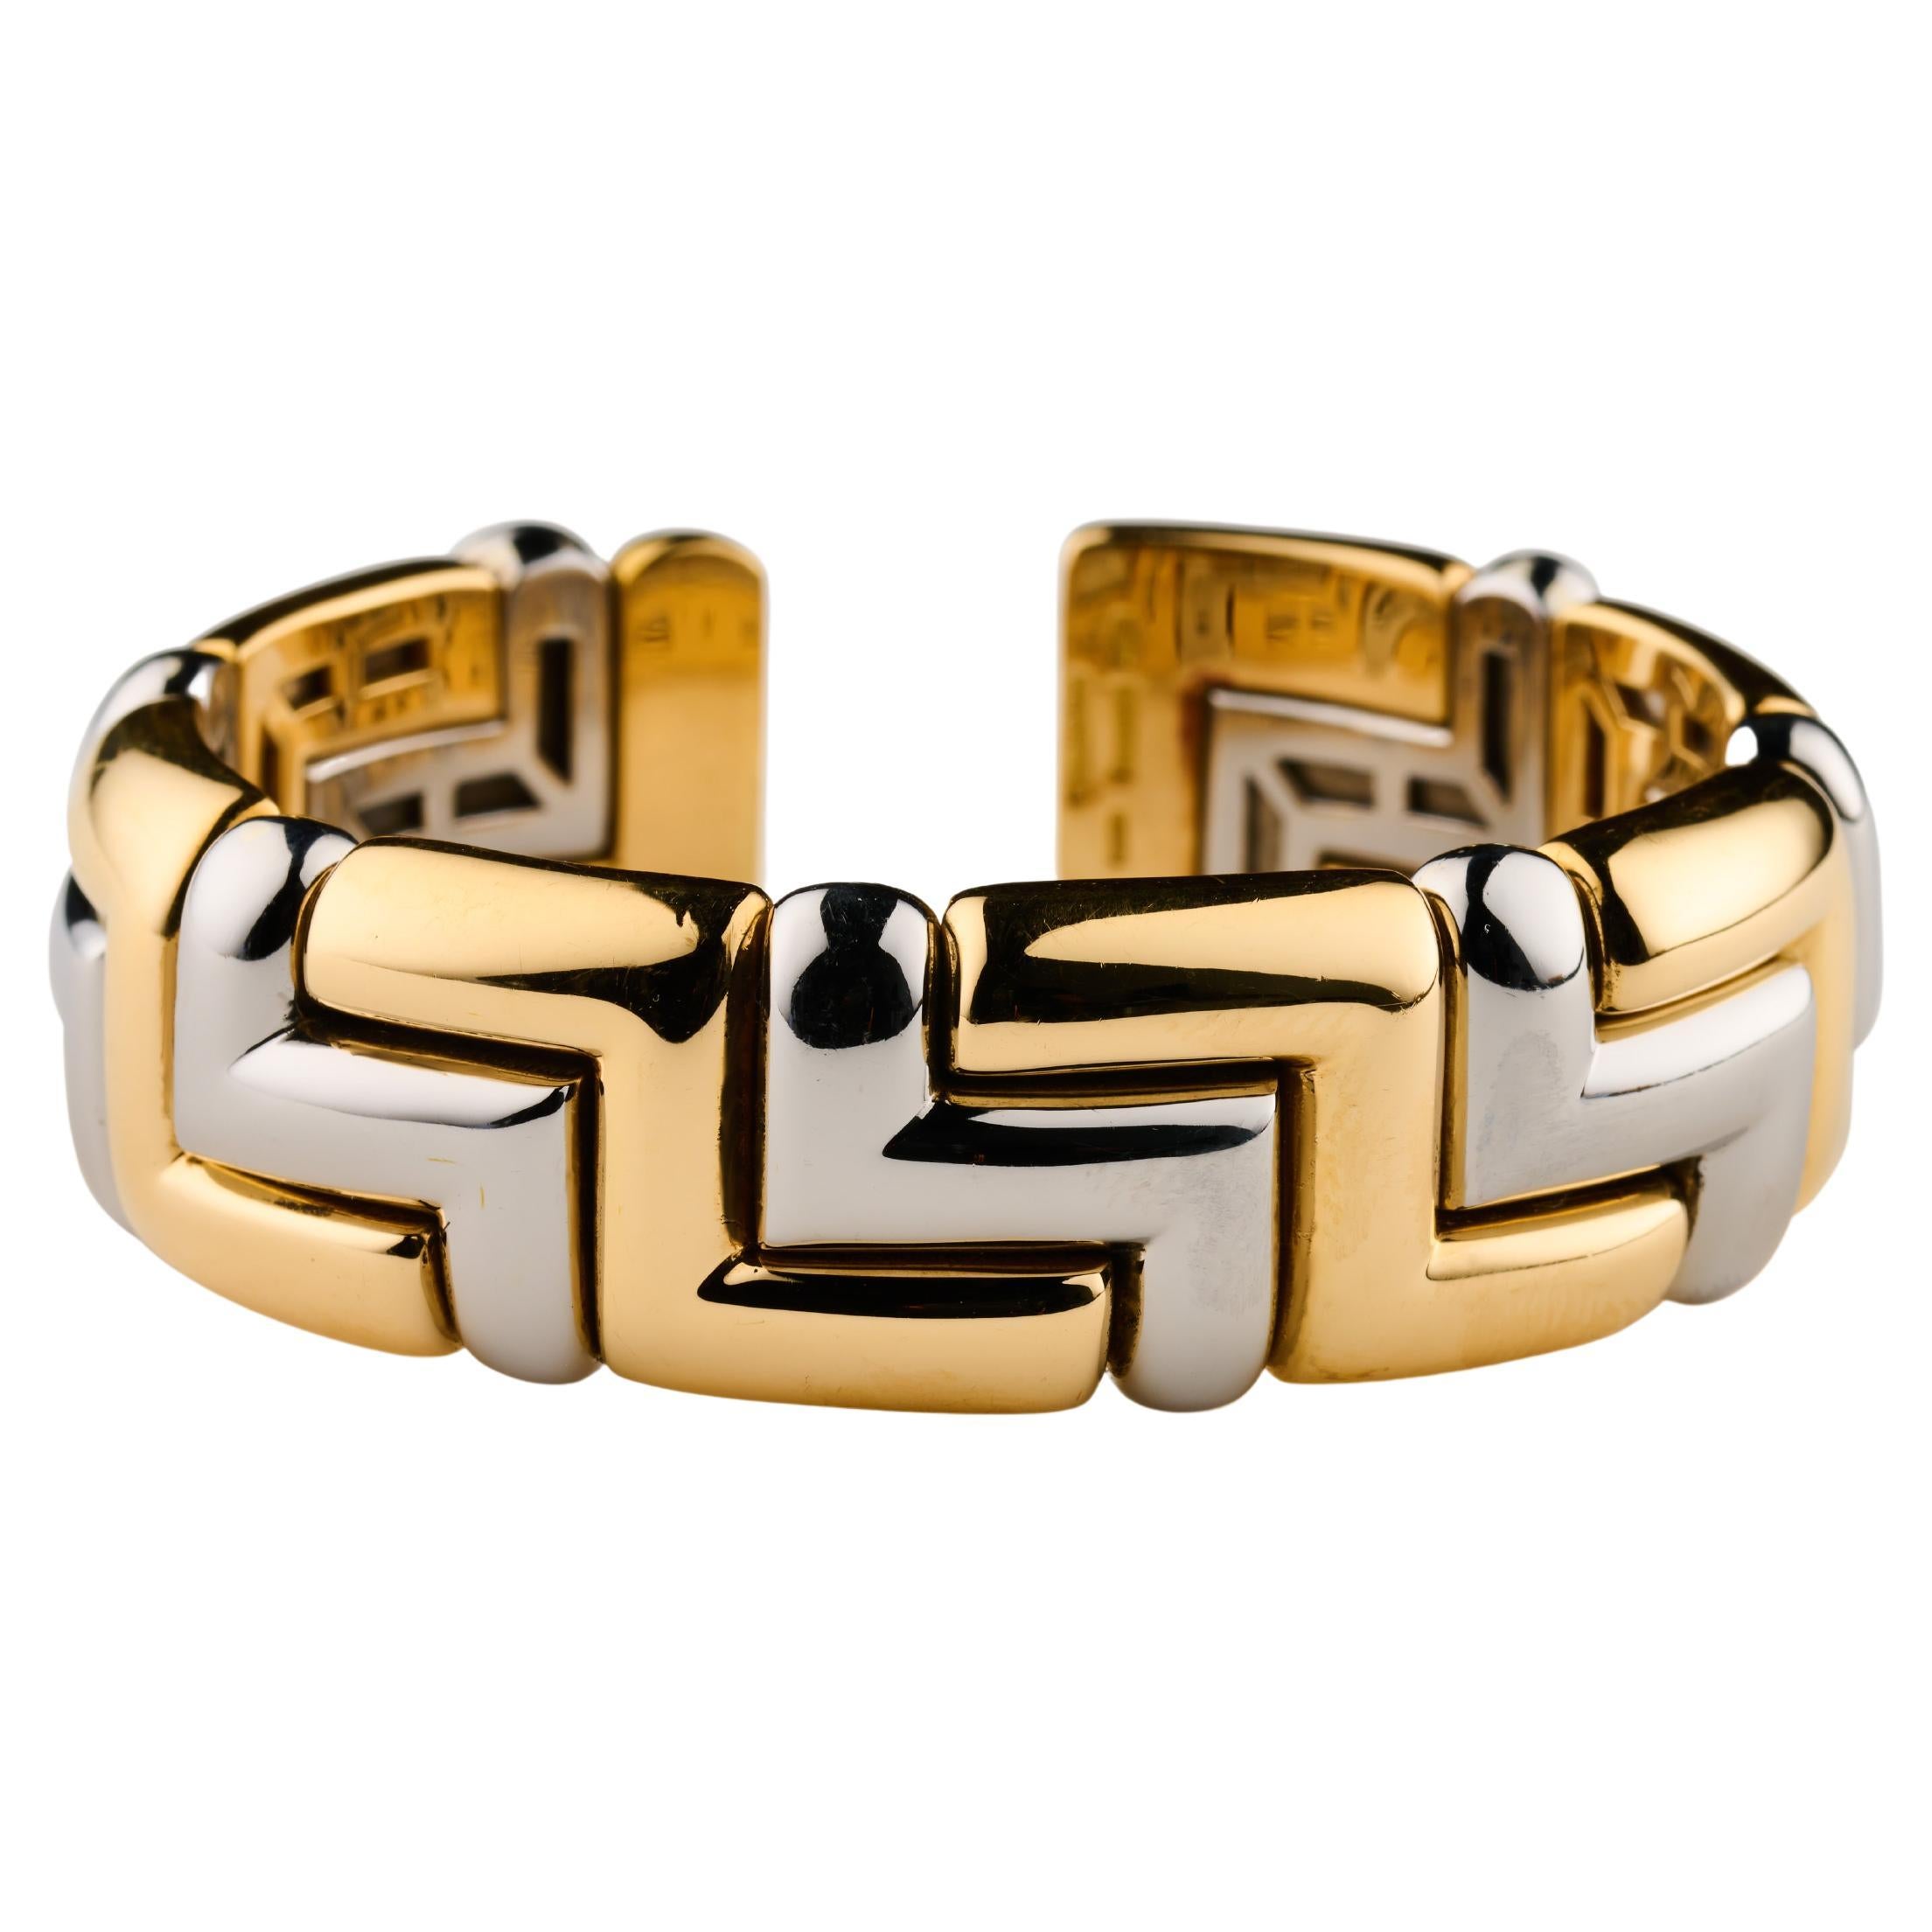 Luxury Cuff Bracelet Bangle Stainless Steel Bangle Carving Roman